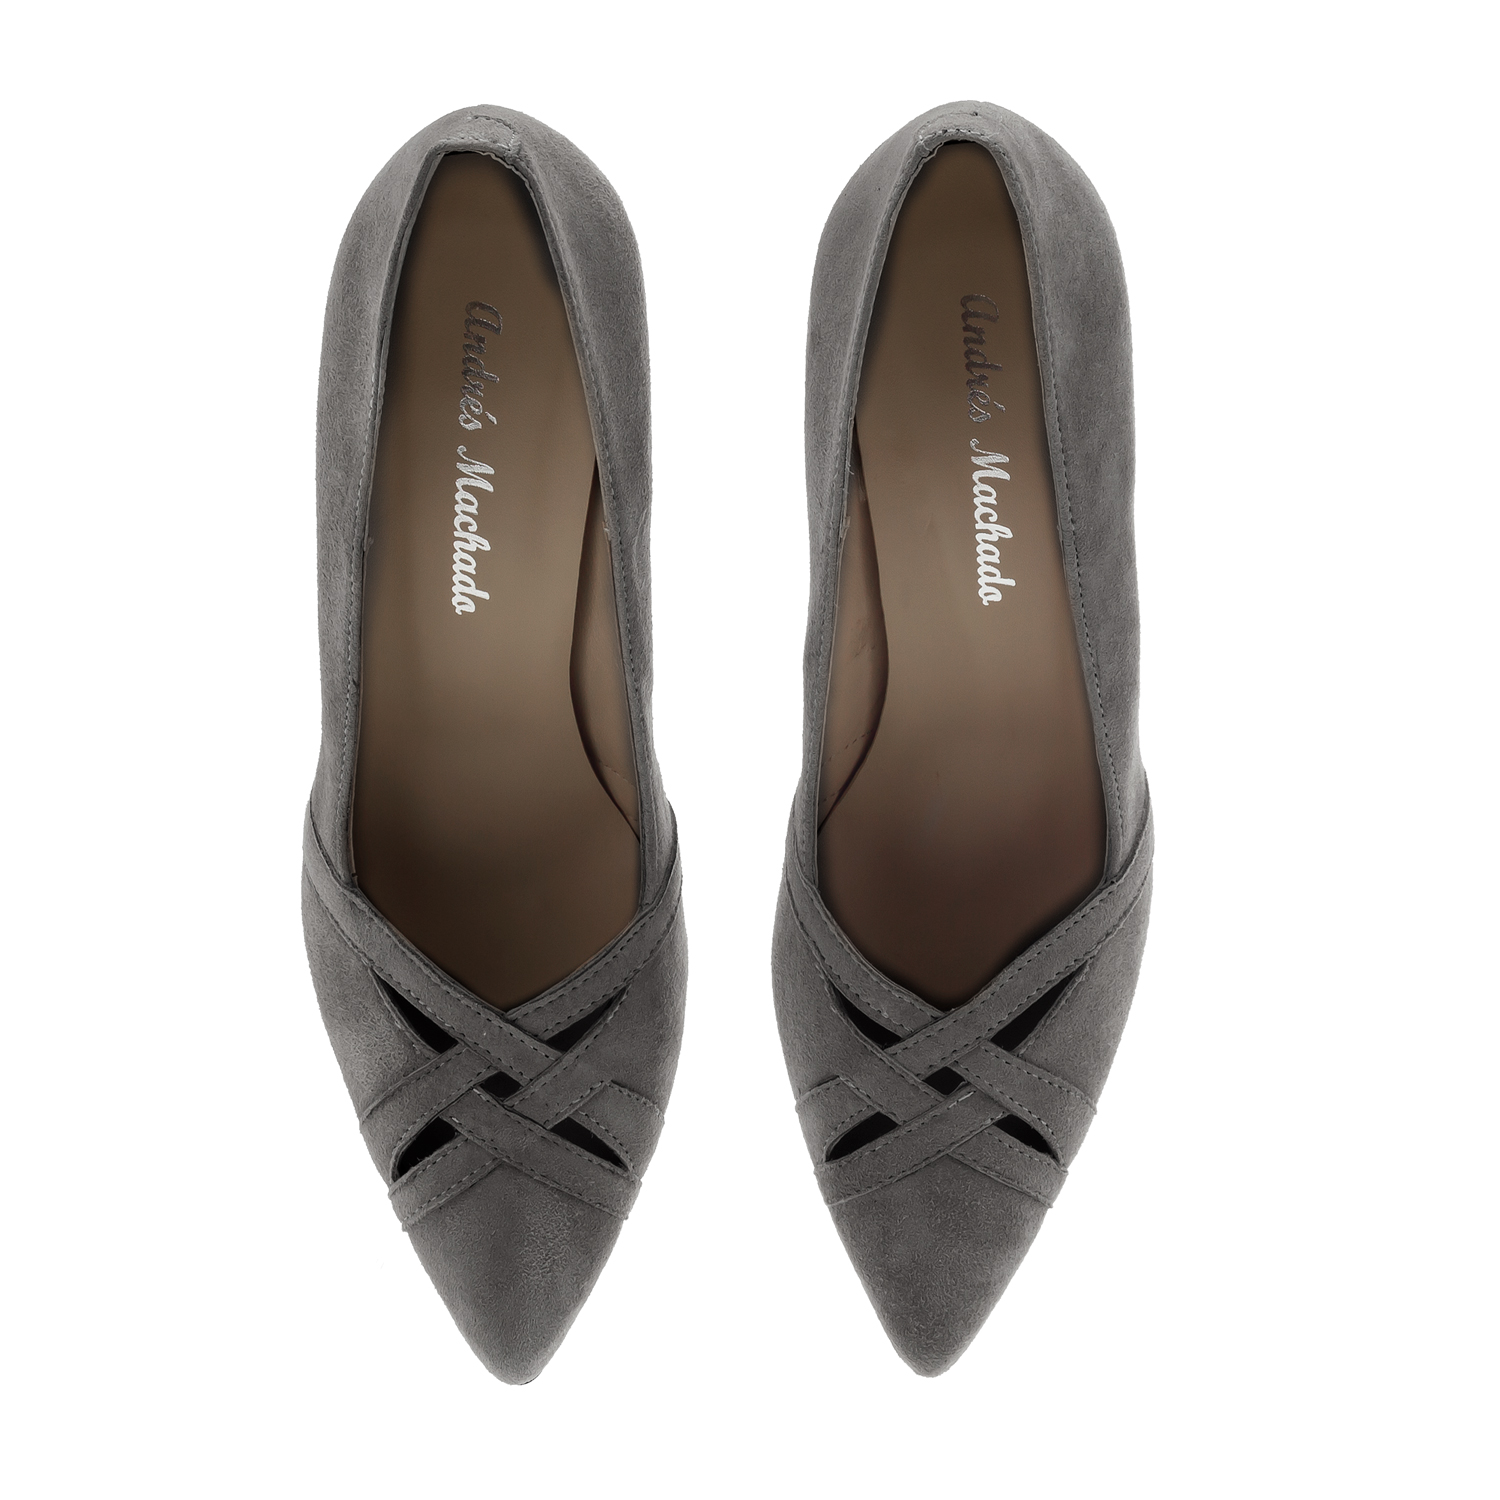 Crossover Stilettos in Grey Suede Leather 